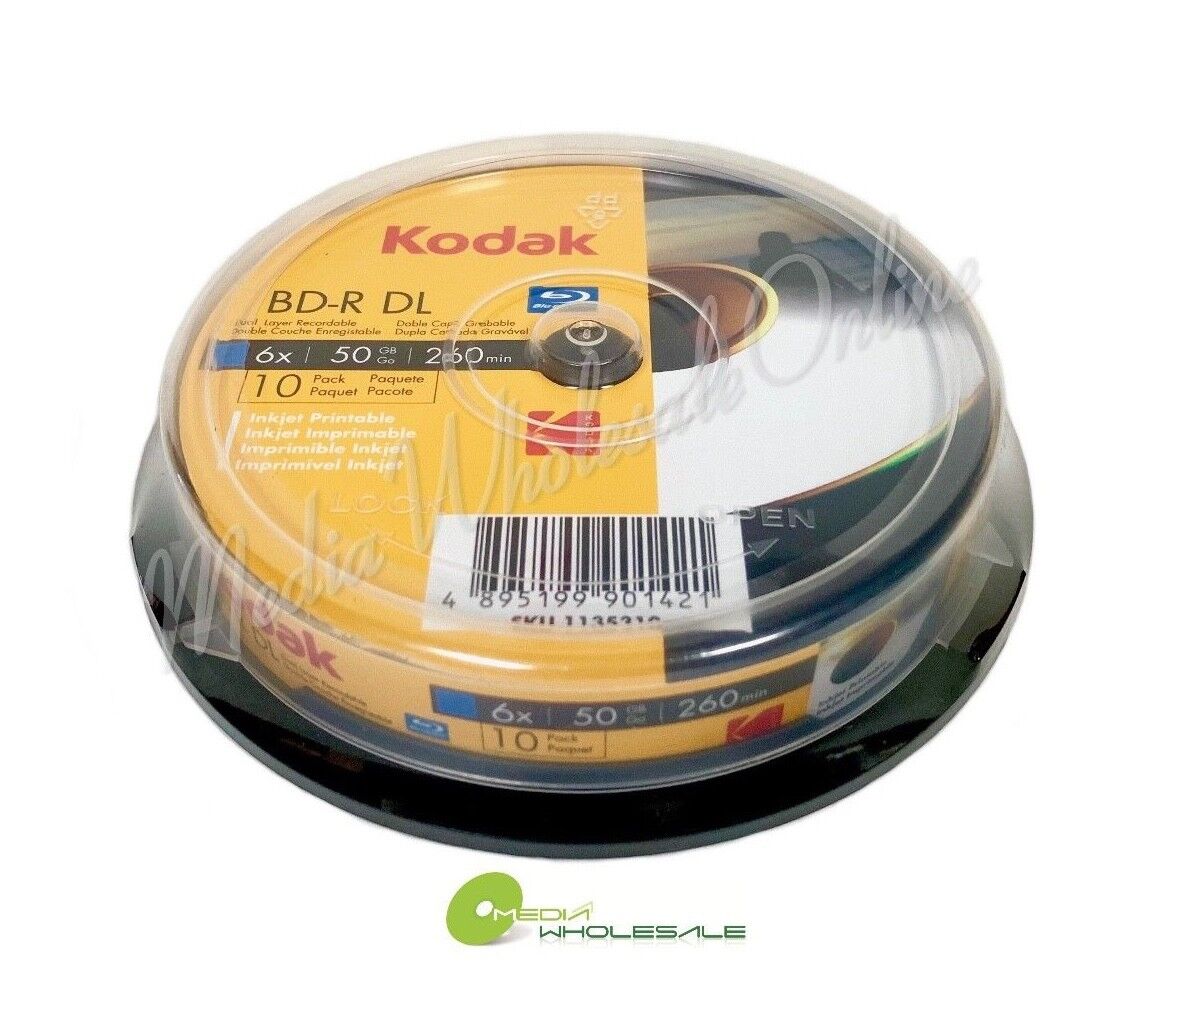 10 KODAK Blank Blu-Ray BD-R BDR DL Dual Double Layer 6X 50GB Inkjet Printable